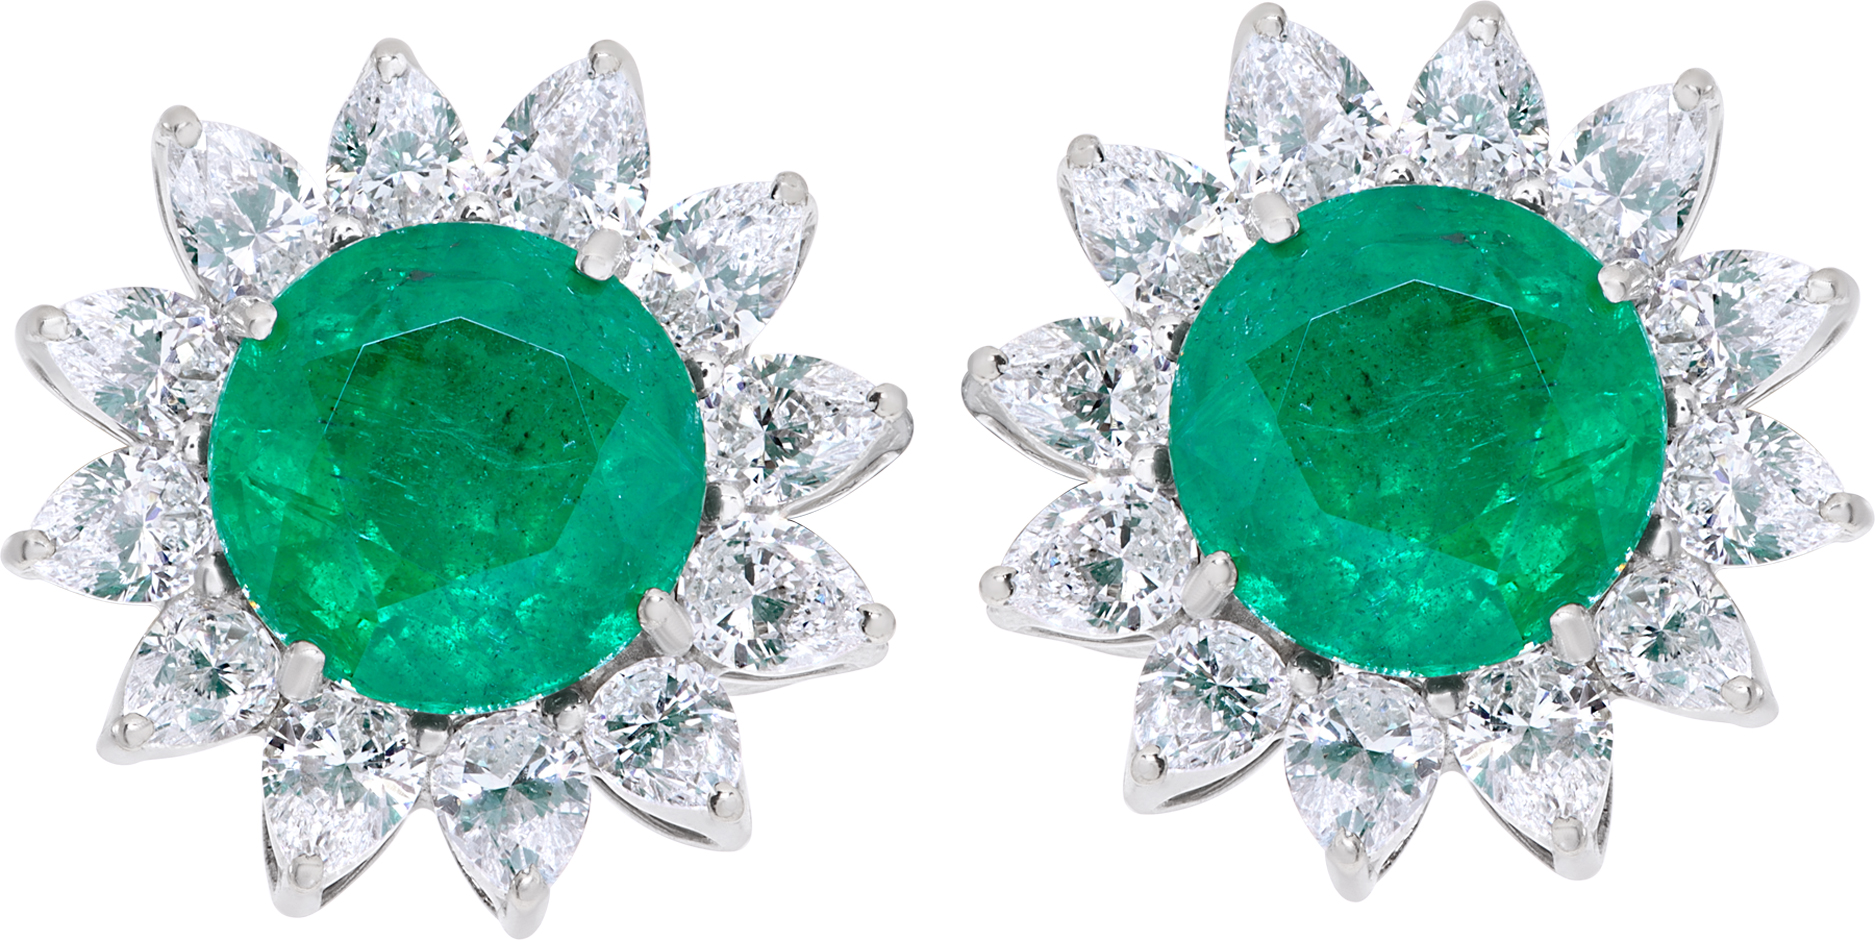 Zambian emerald and diamond earrings in 18k white gold